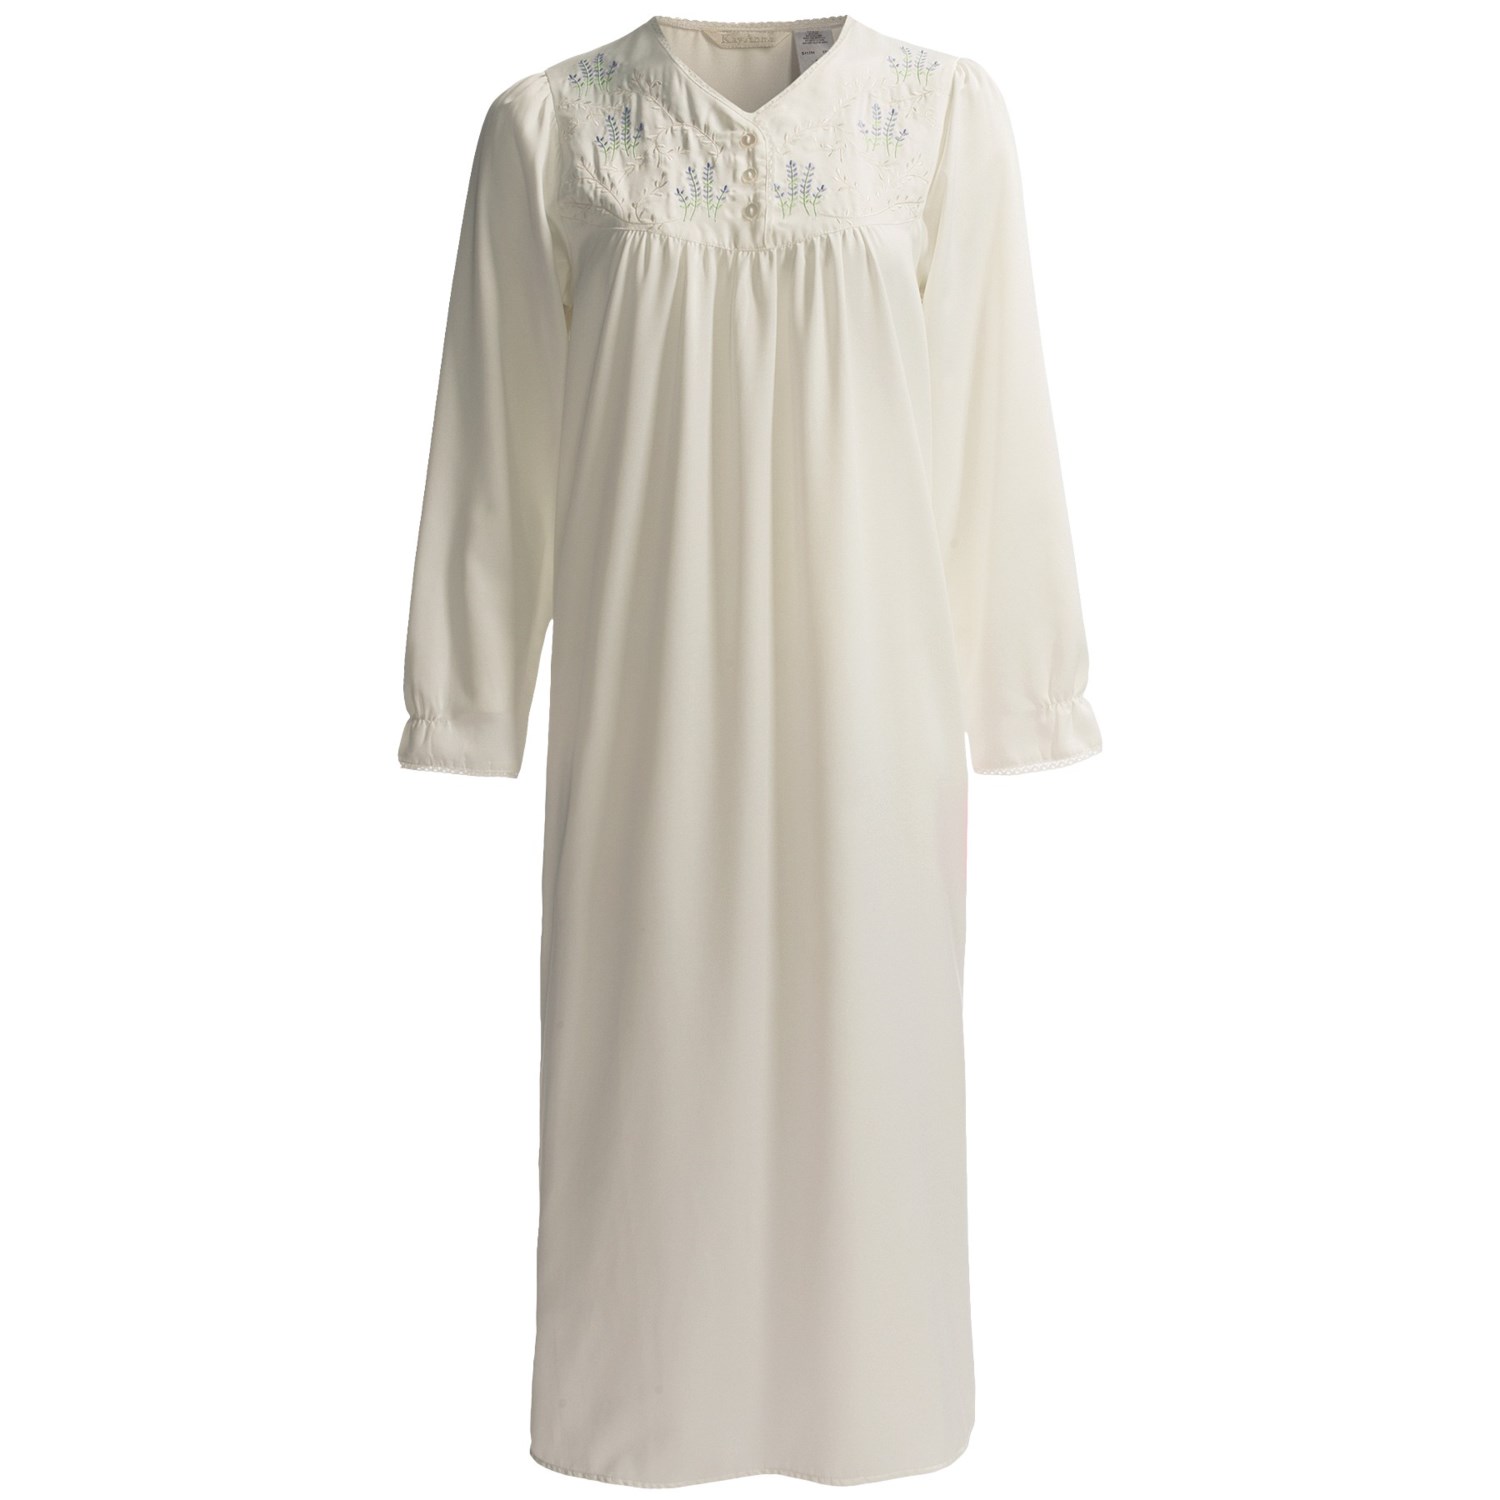 Brushed Nylon Nightgowns 88